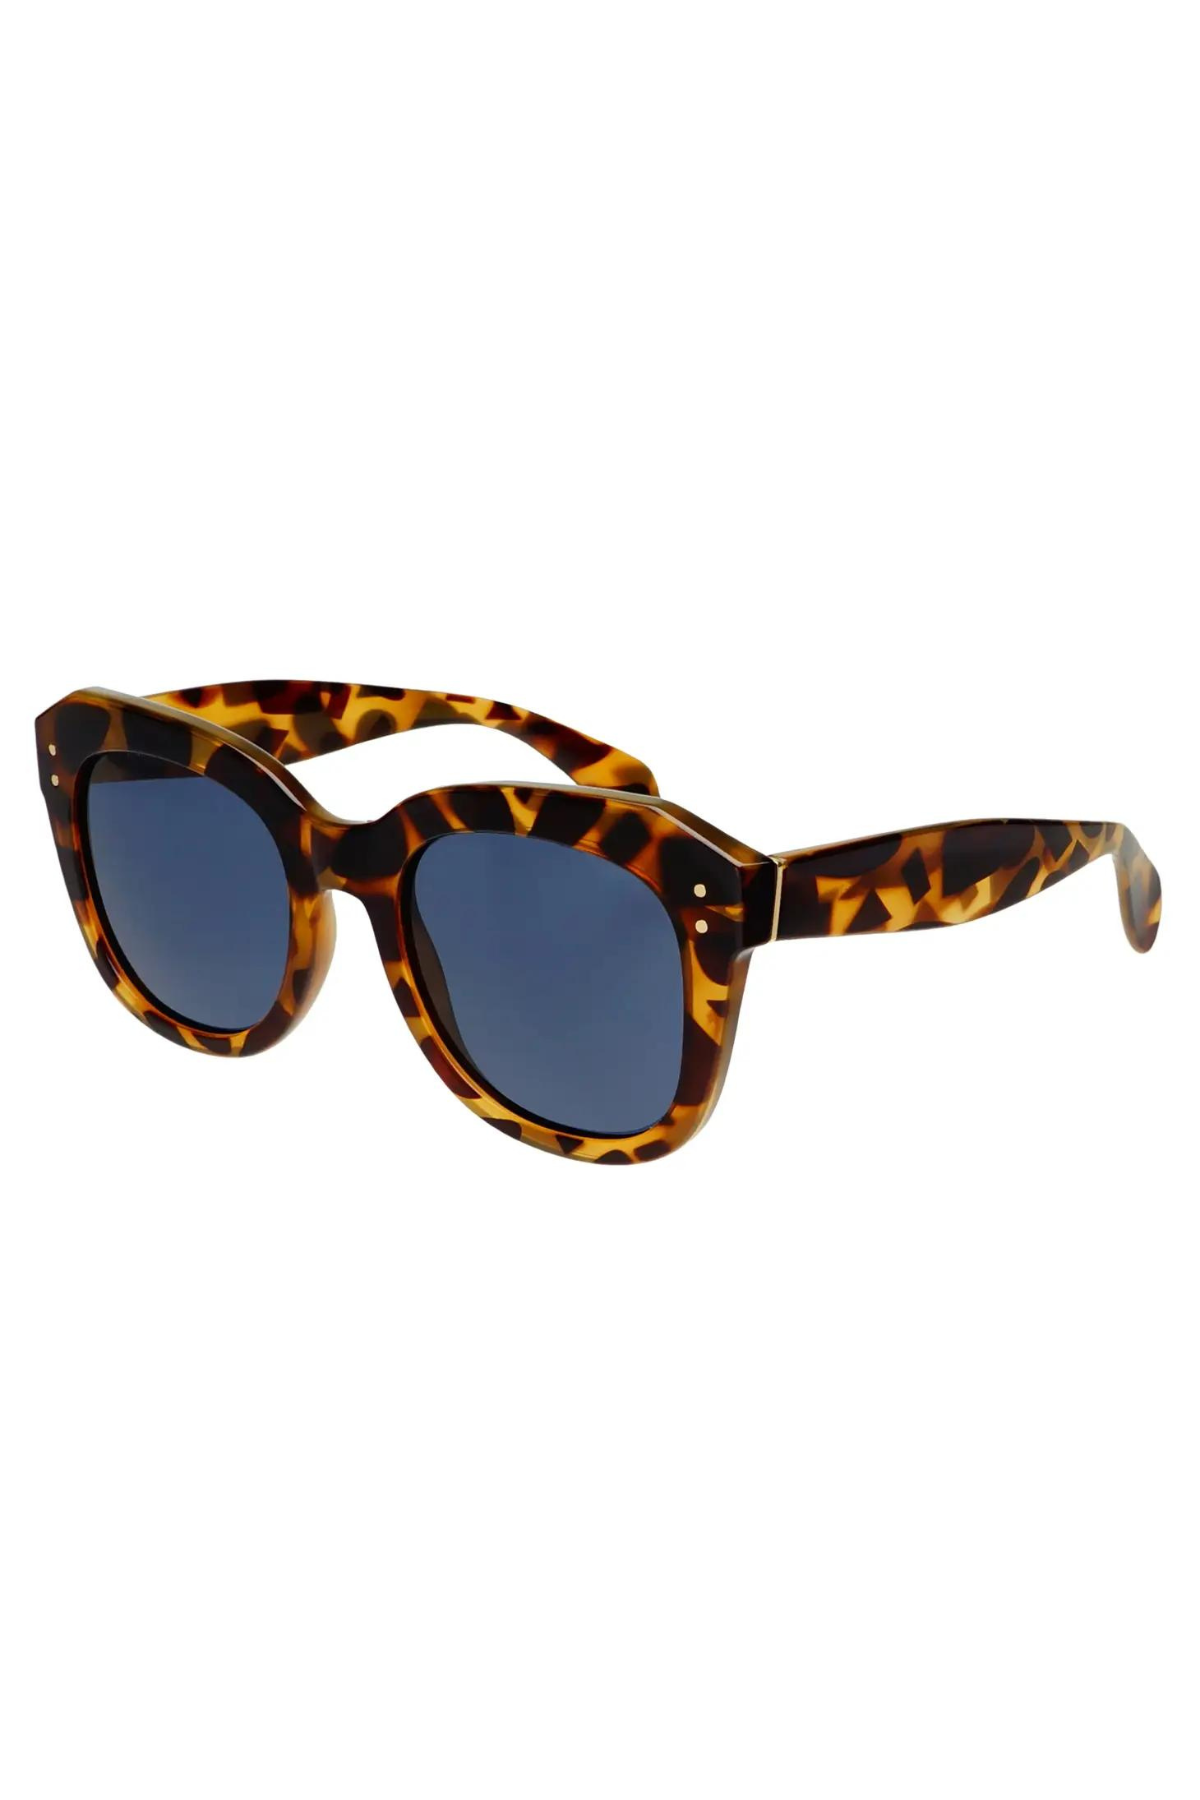 FREYRS: Sweet Peach Sunglasses